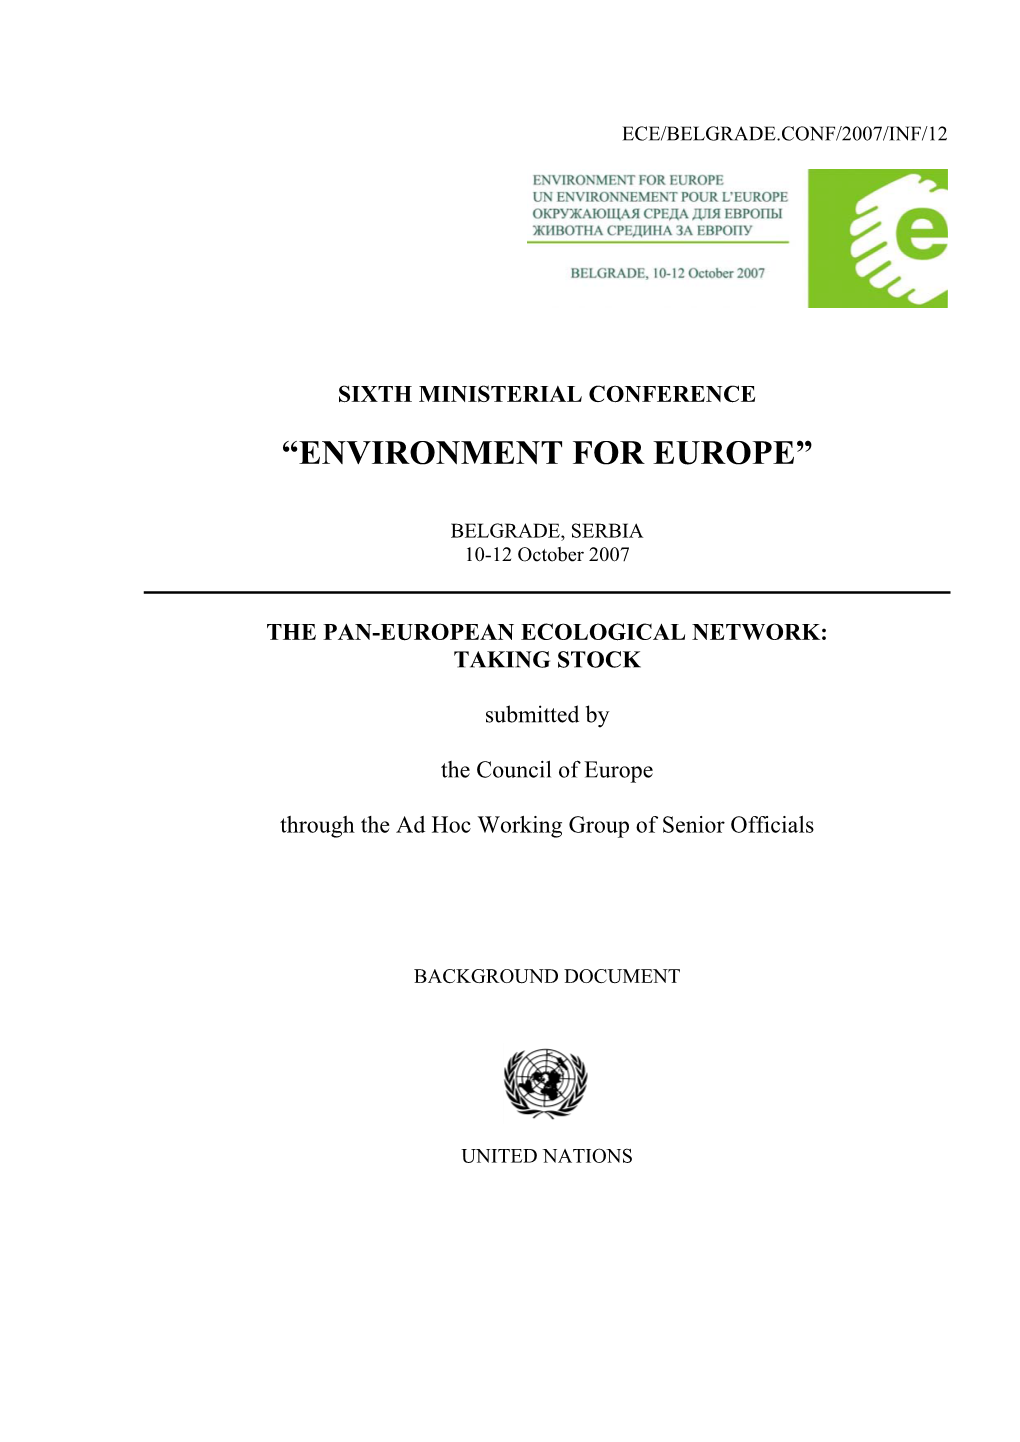 Pan-European Ecological Network: Taking Stock